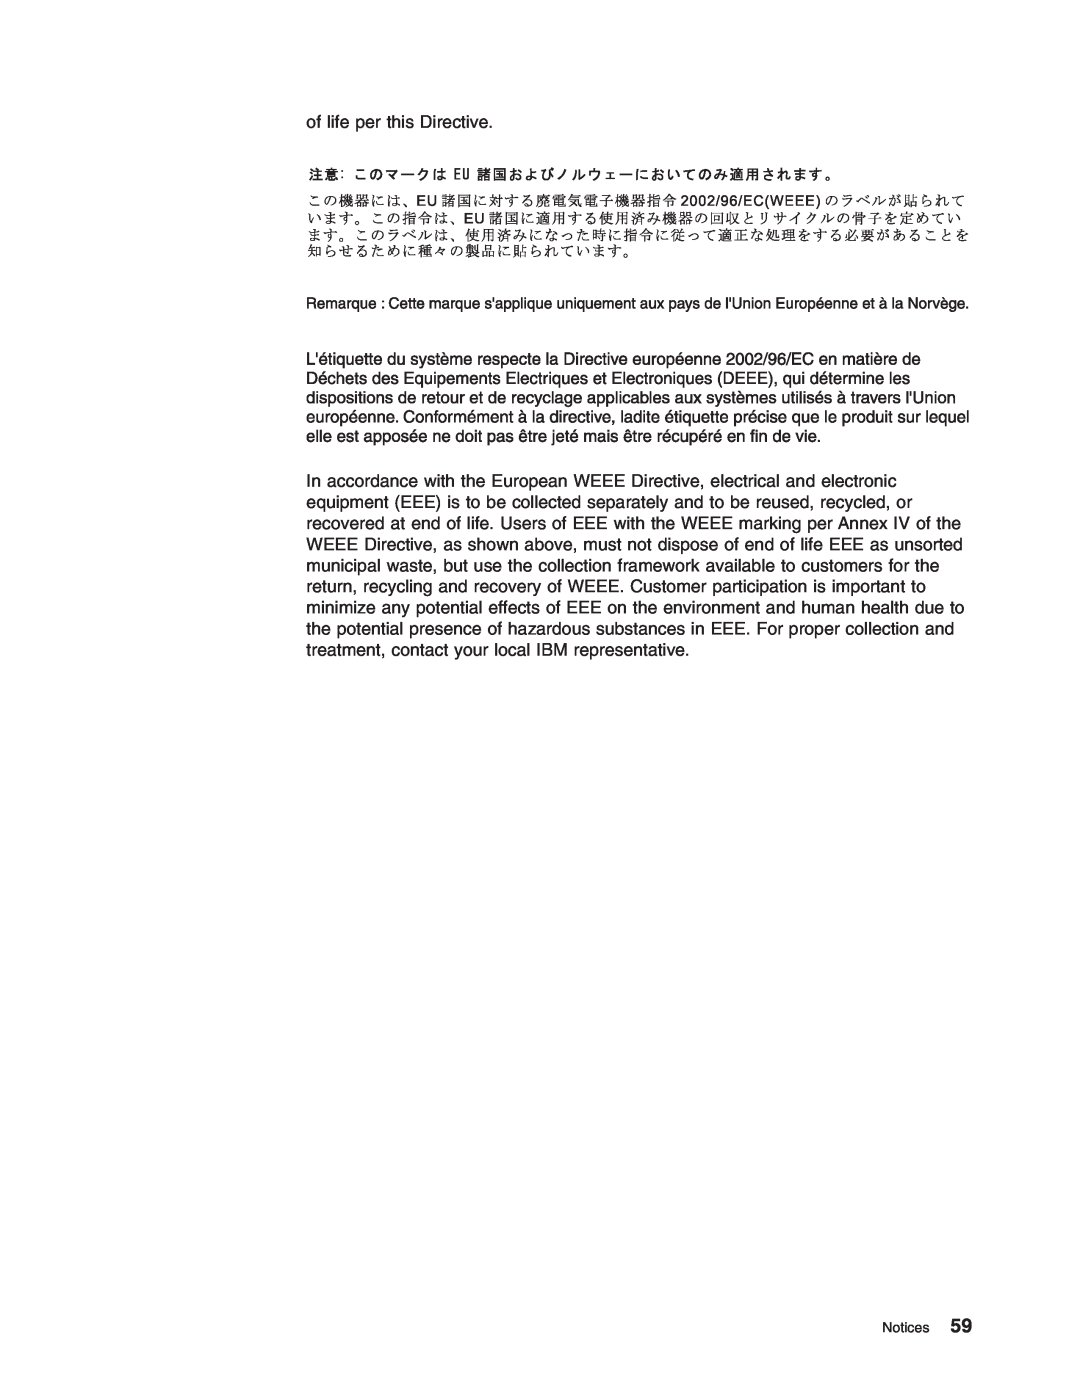 IBM DCS9550 1S1 manual of life per this Directive 